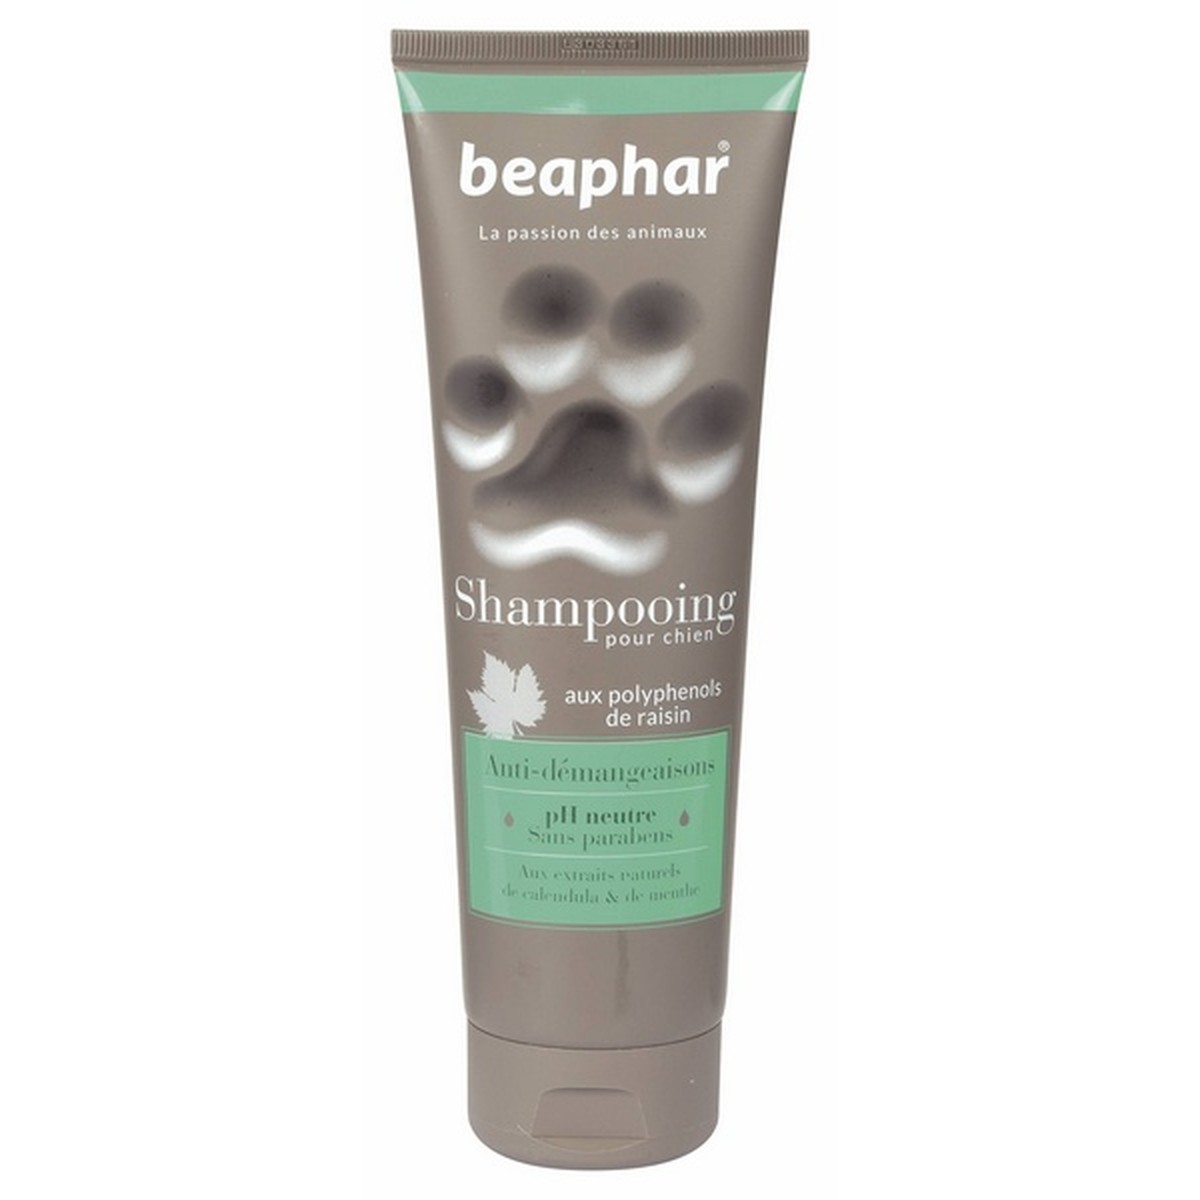   Beaphar Shampooing Anti-Itch 250 ml, contre démangeaisons et piqures d'insectes  250ml